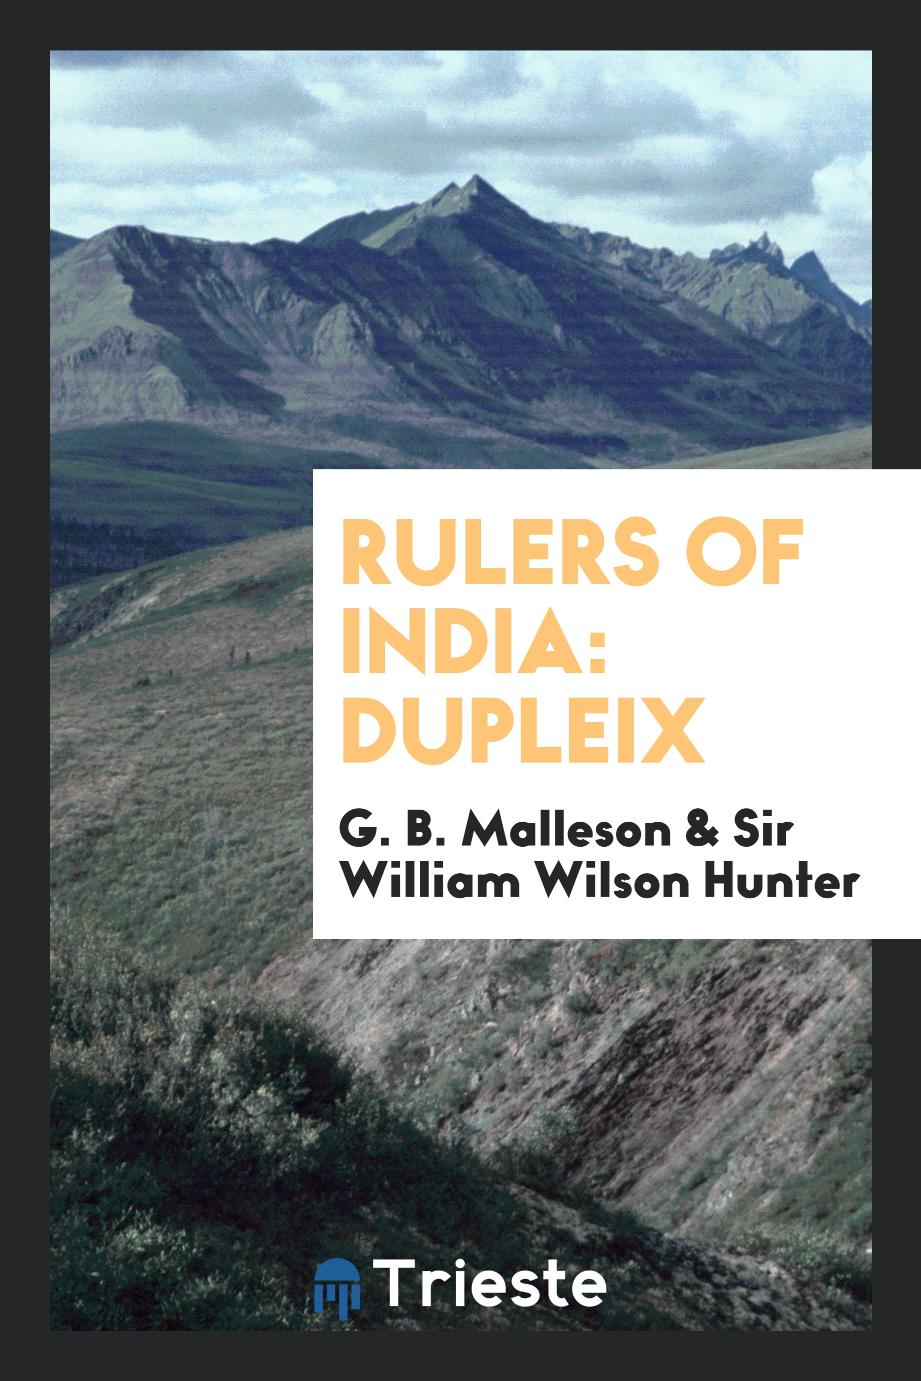 G. B. Malleson, Sir William Wilson Hunter - Rulers of India: Dupleix